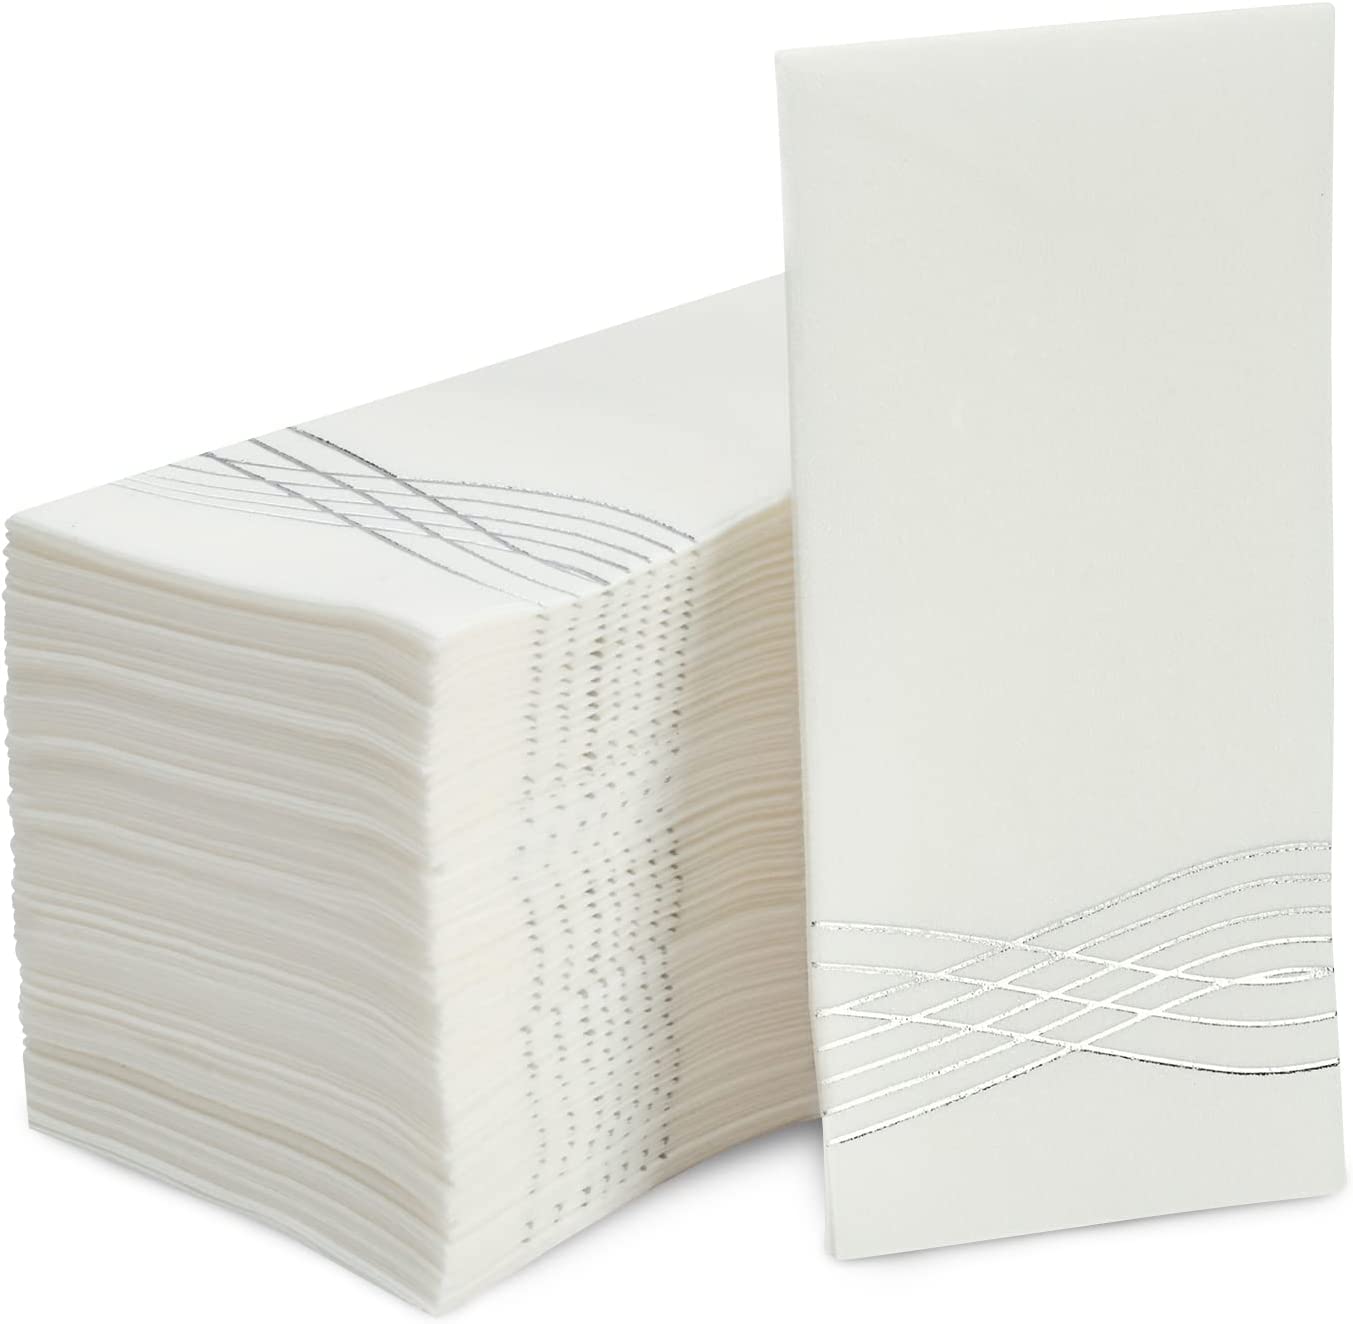 100PCS Disposable White Napkins Linen Feel Guest Hand Towels White